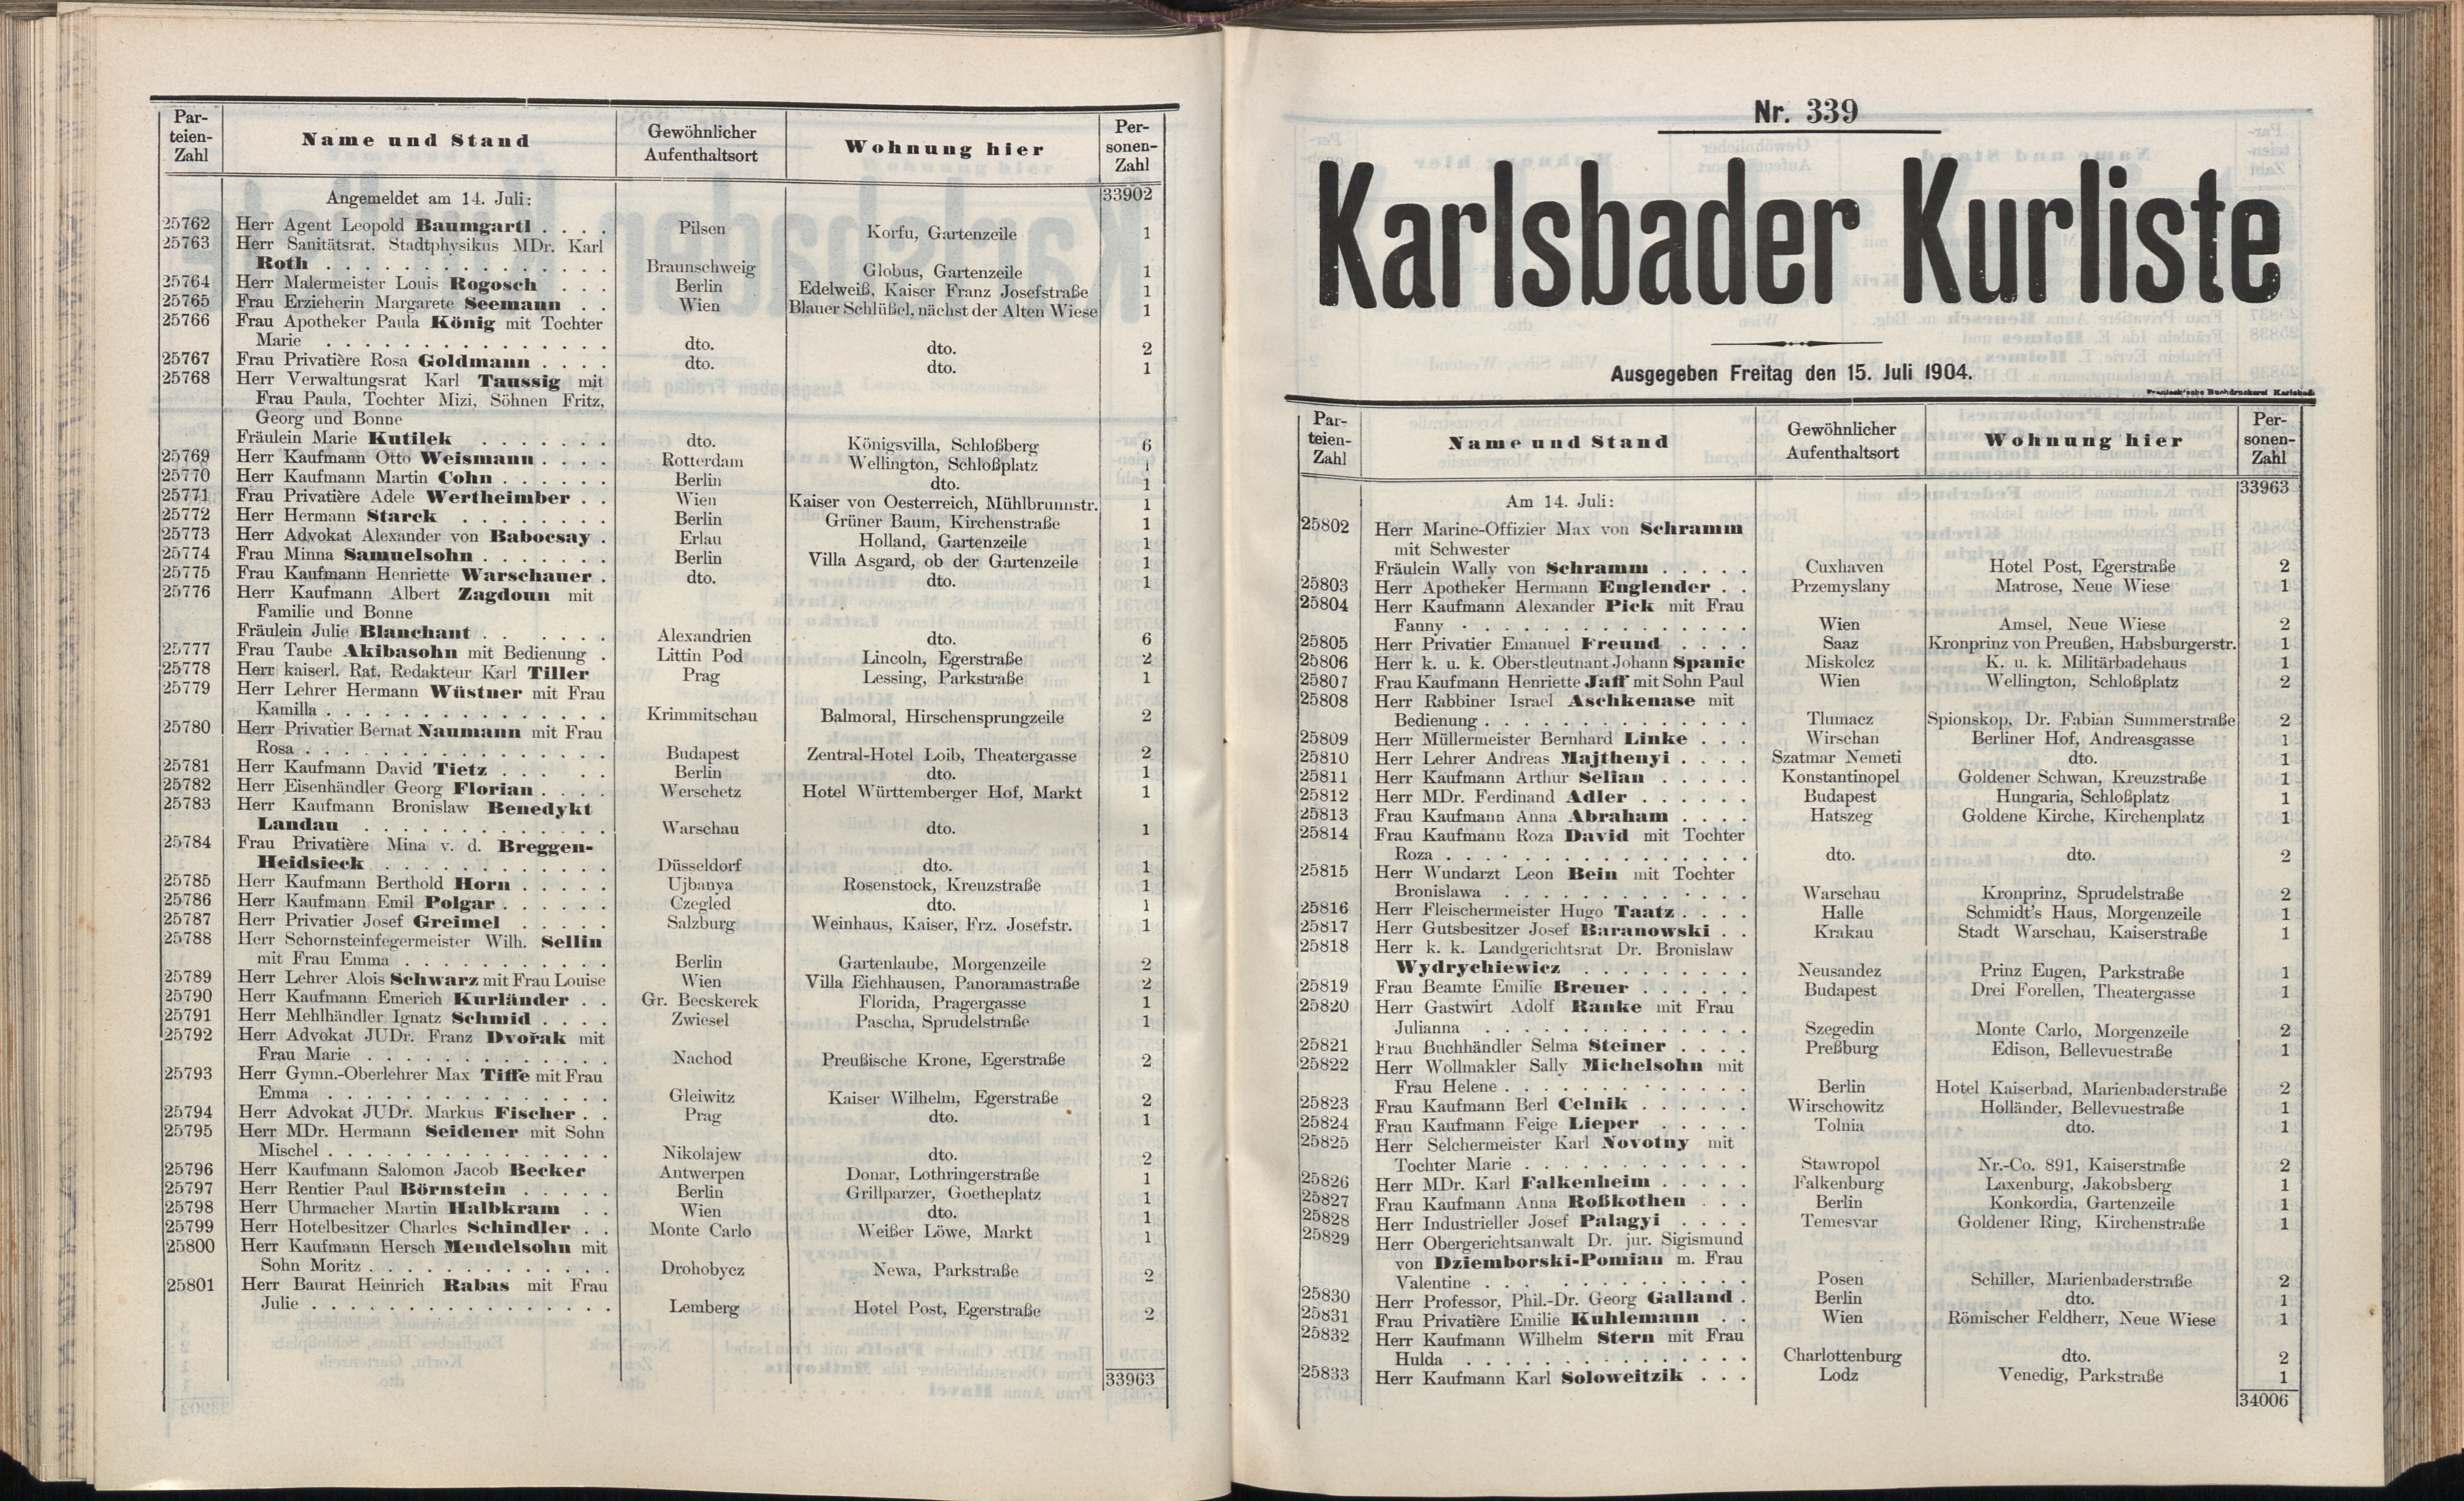 361. soap-kv_knihovna_karlsbader-kurliste-1904_3620